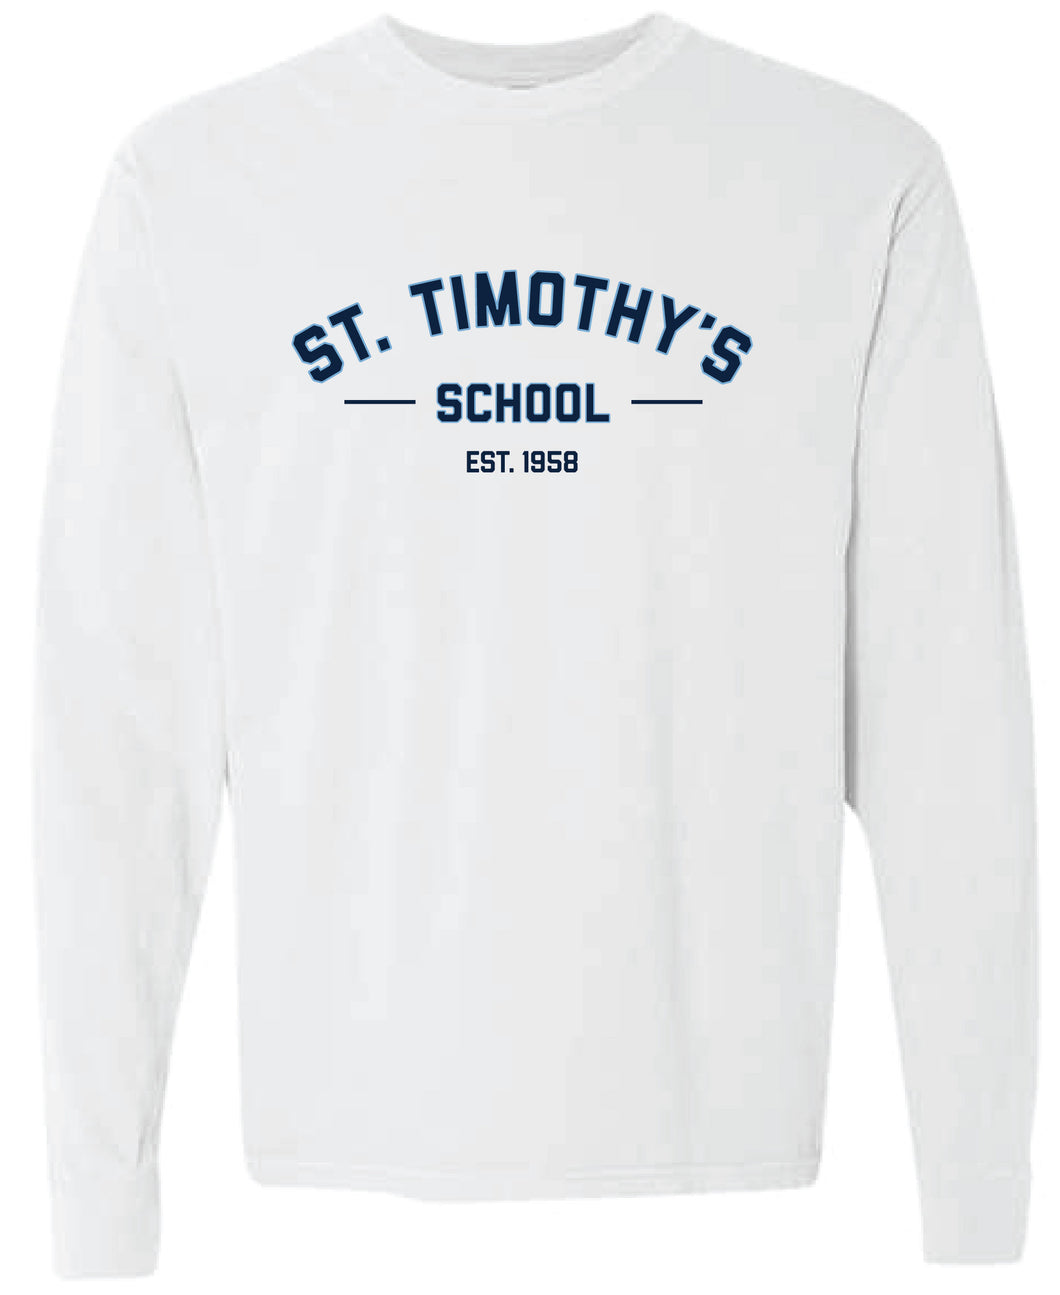 Long Sleeve WHITE St.Timothy's School T-shirt